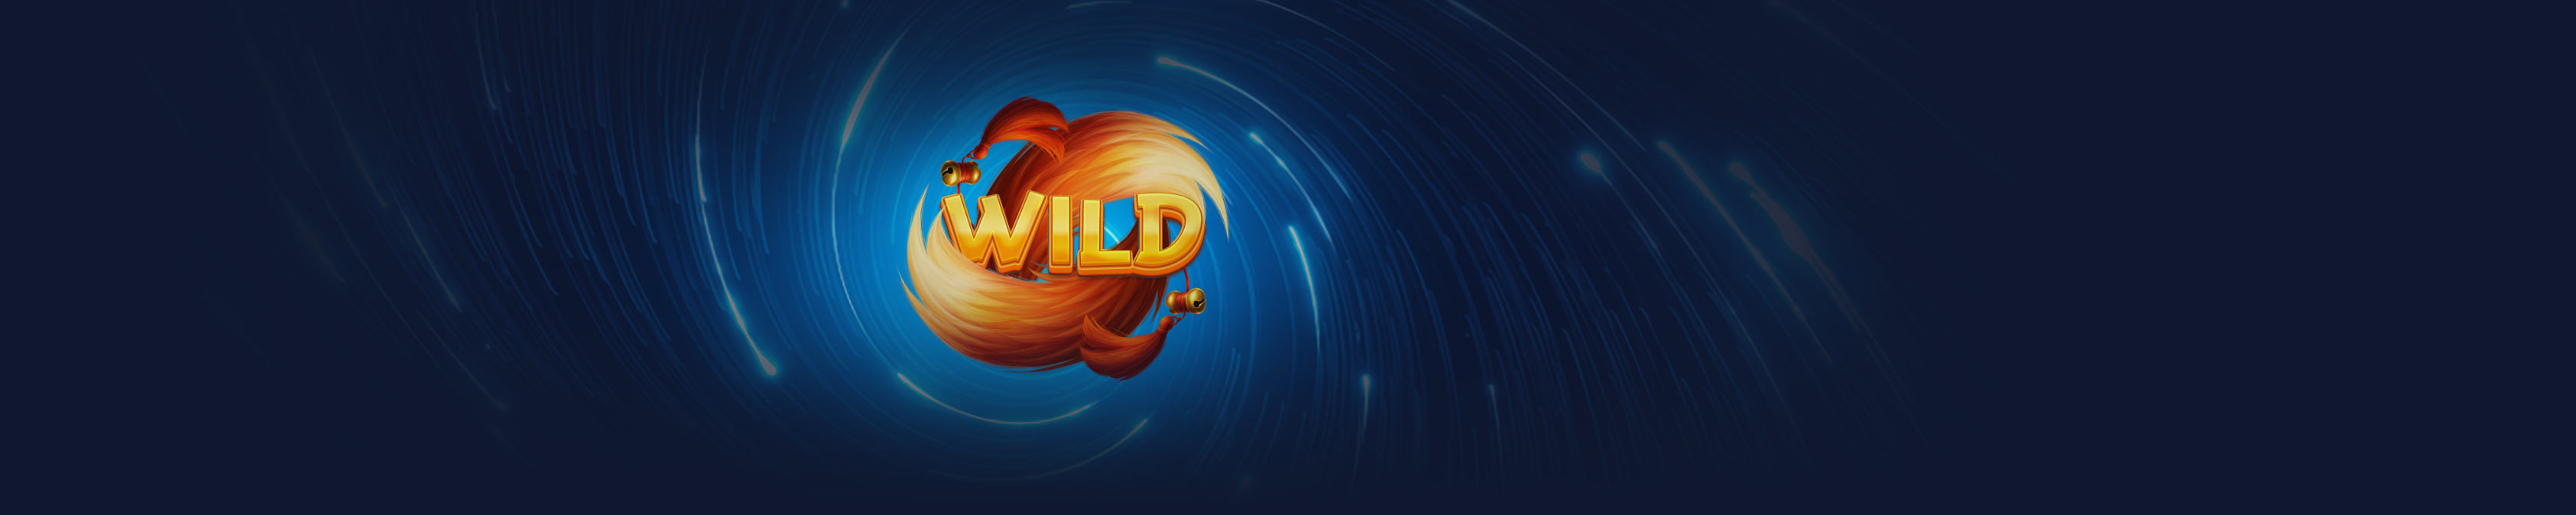 casinosearch.eu Wild symbols in online slot machines